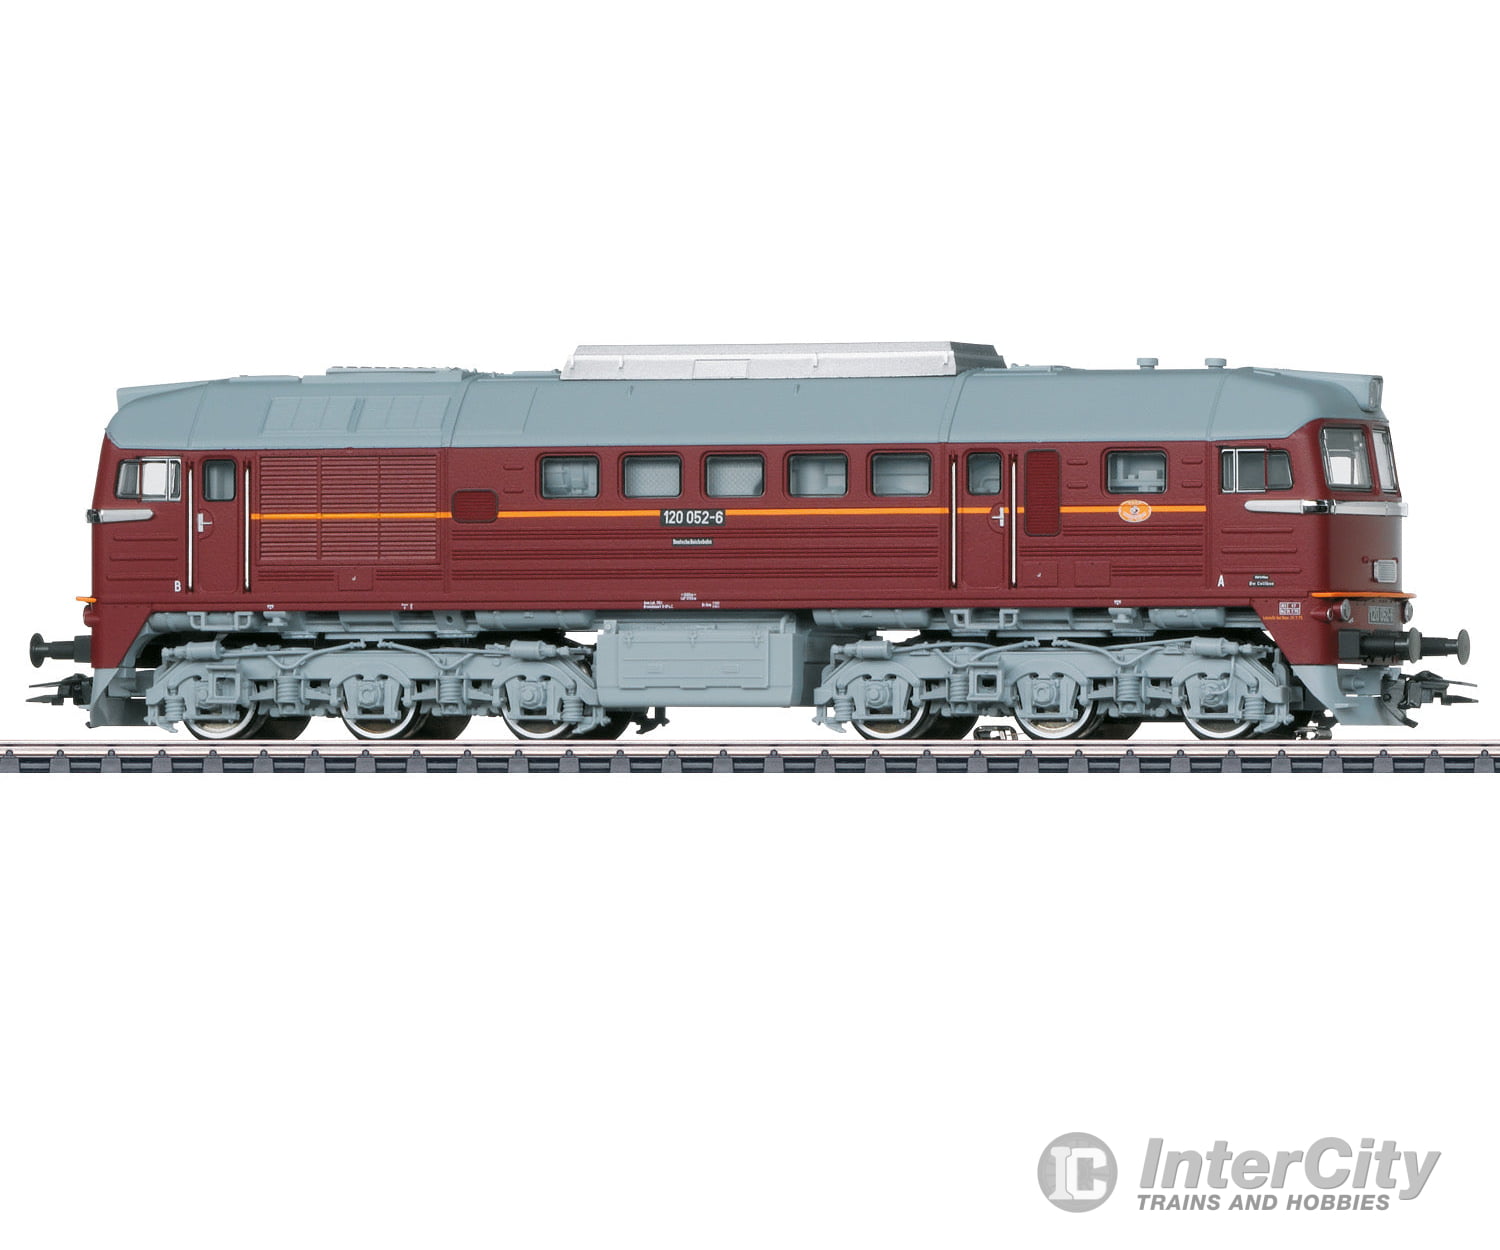 Marklin 39200 Class 120 Diesel Locomotive - Default Title (IC-MARK-39200)